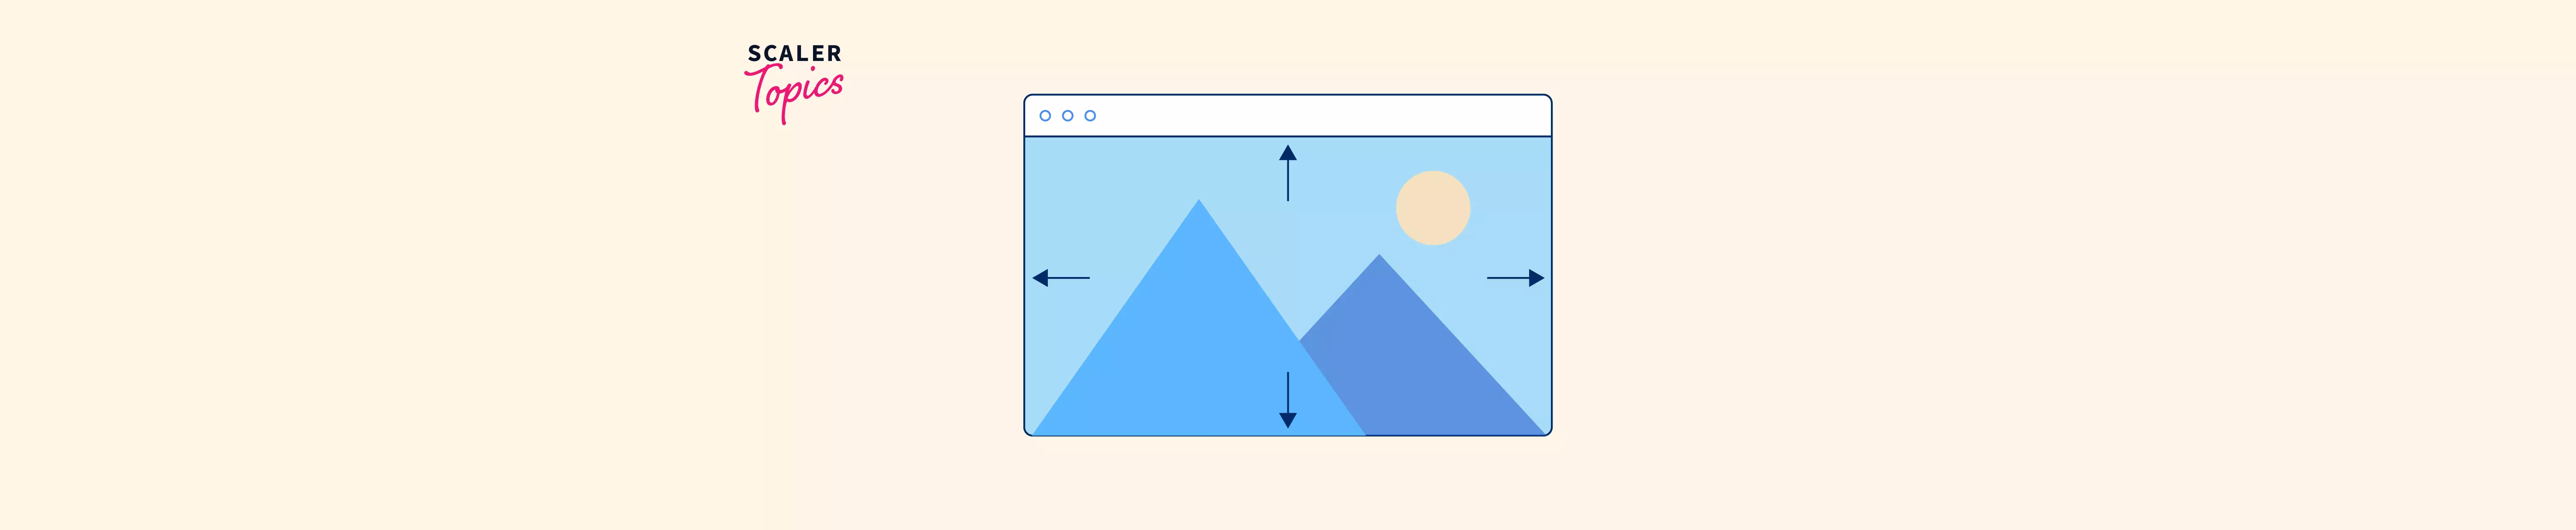 How to Make Full Screen Background Image with CSS  by Prajwal Pradhan   Medium